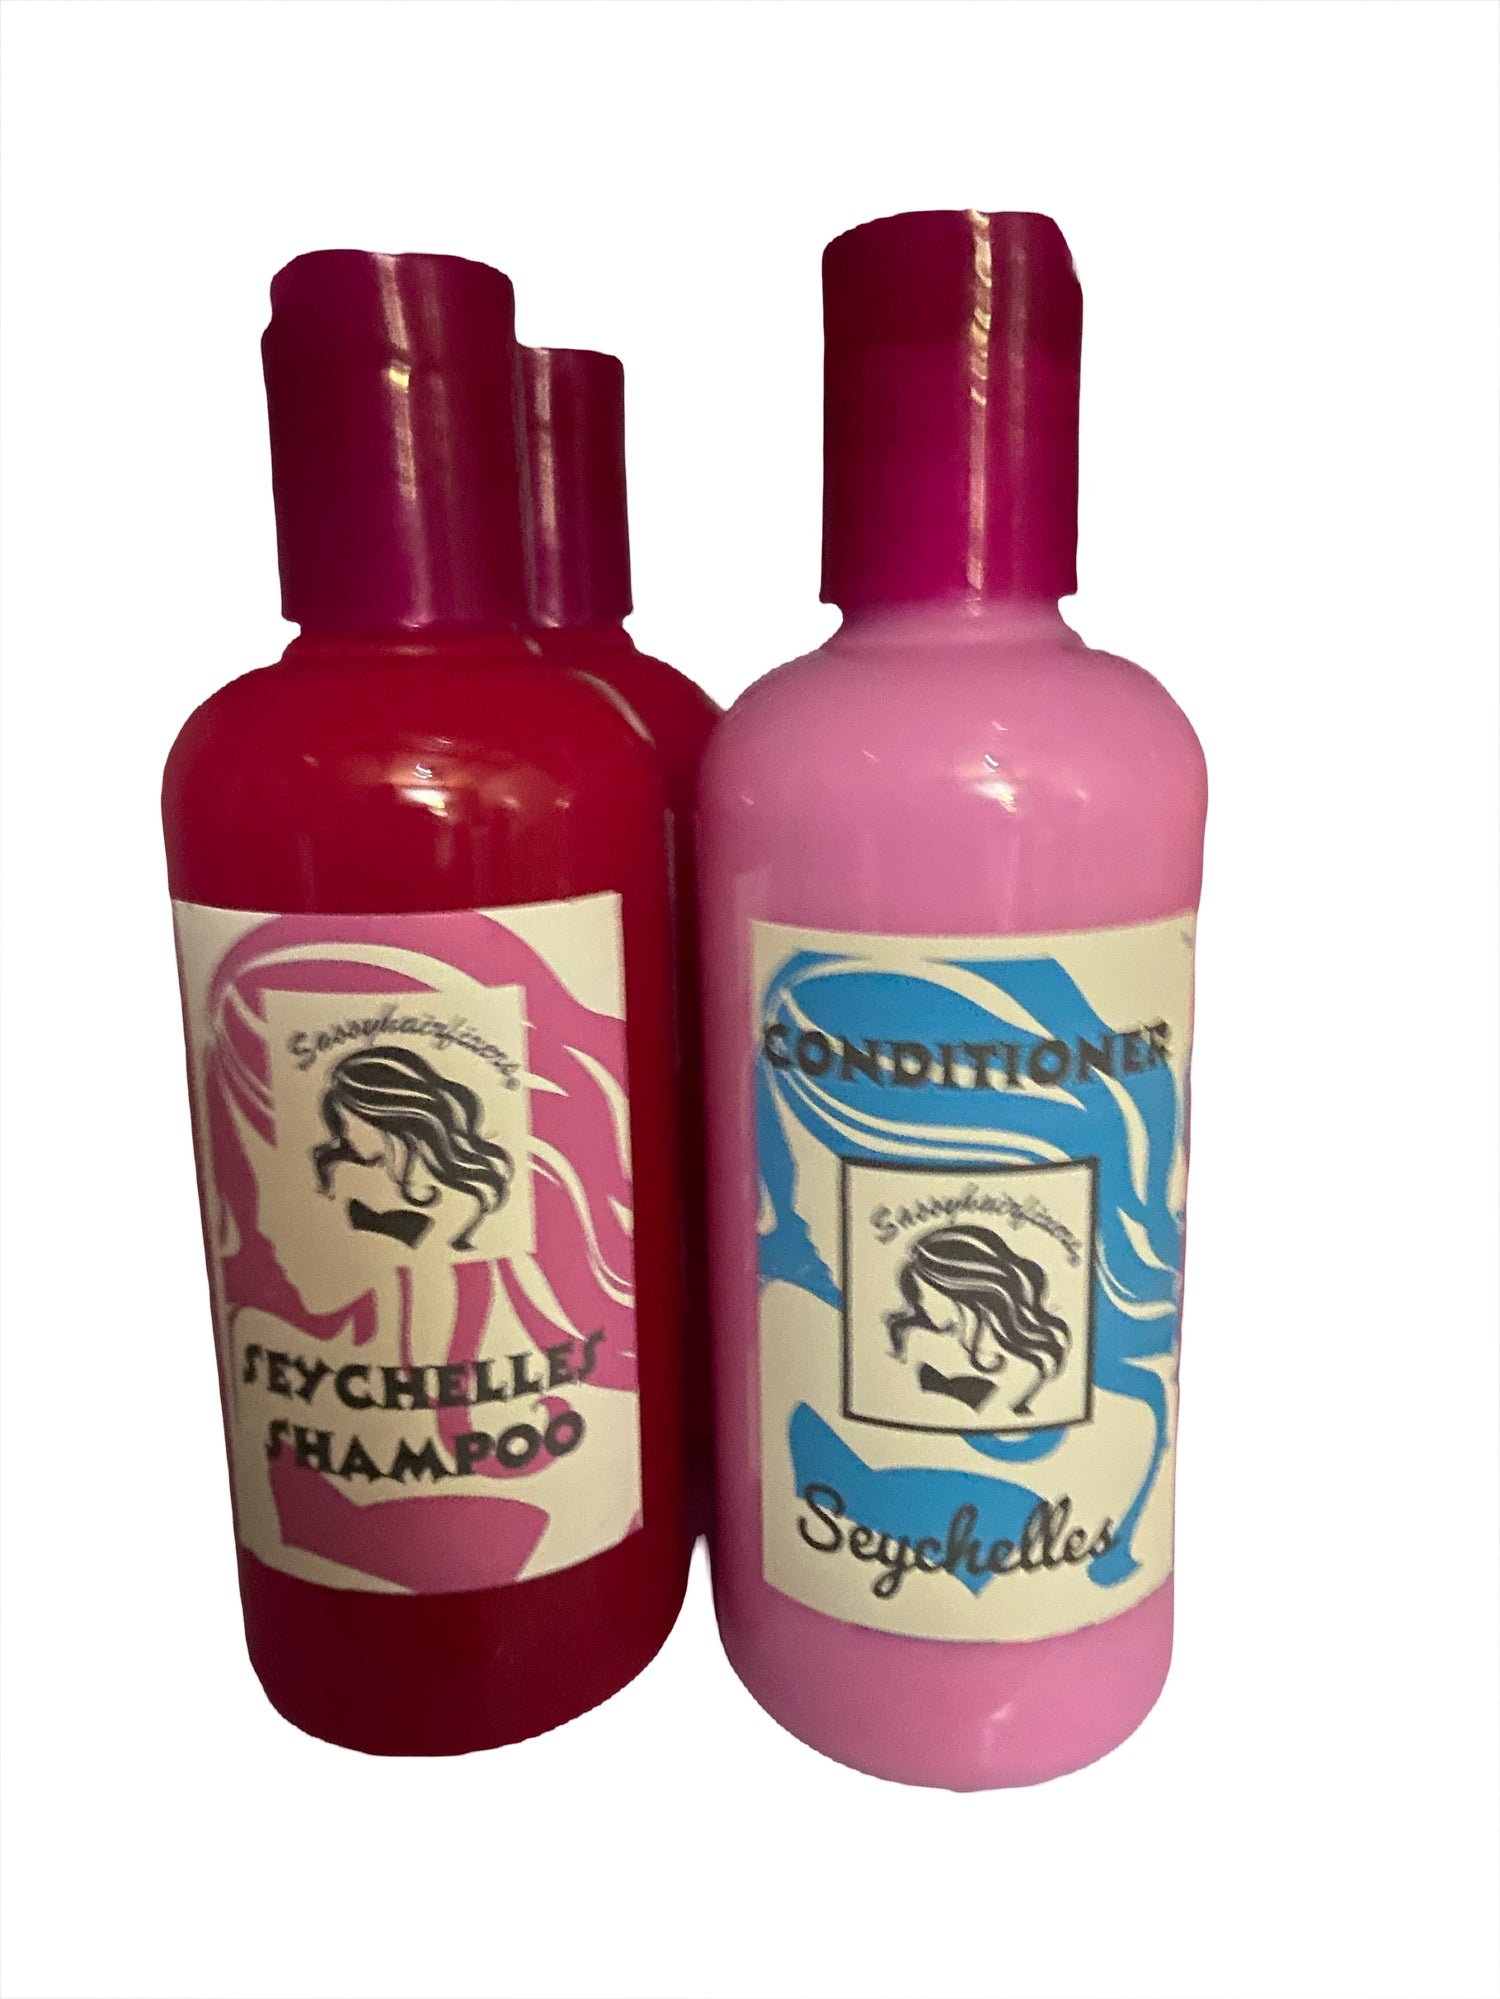 Seychelles shampoo & Conditioner